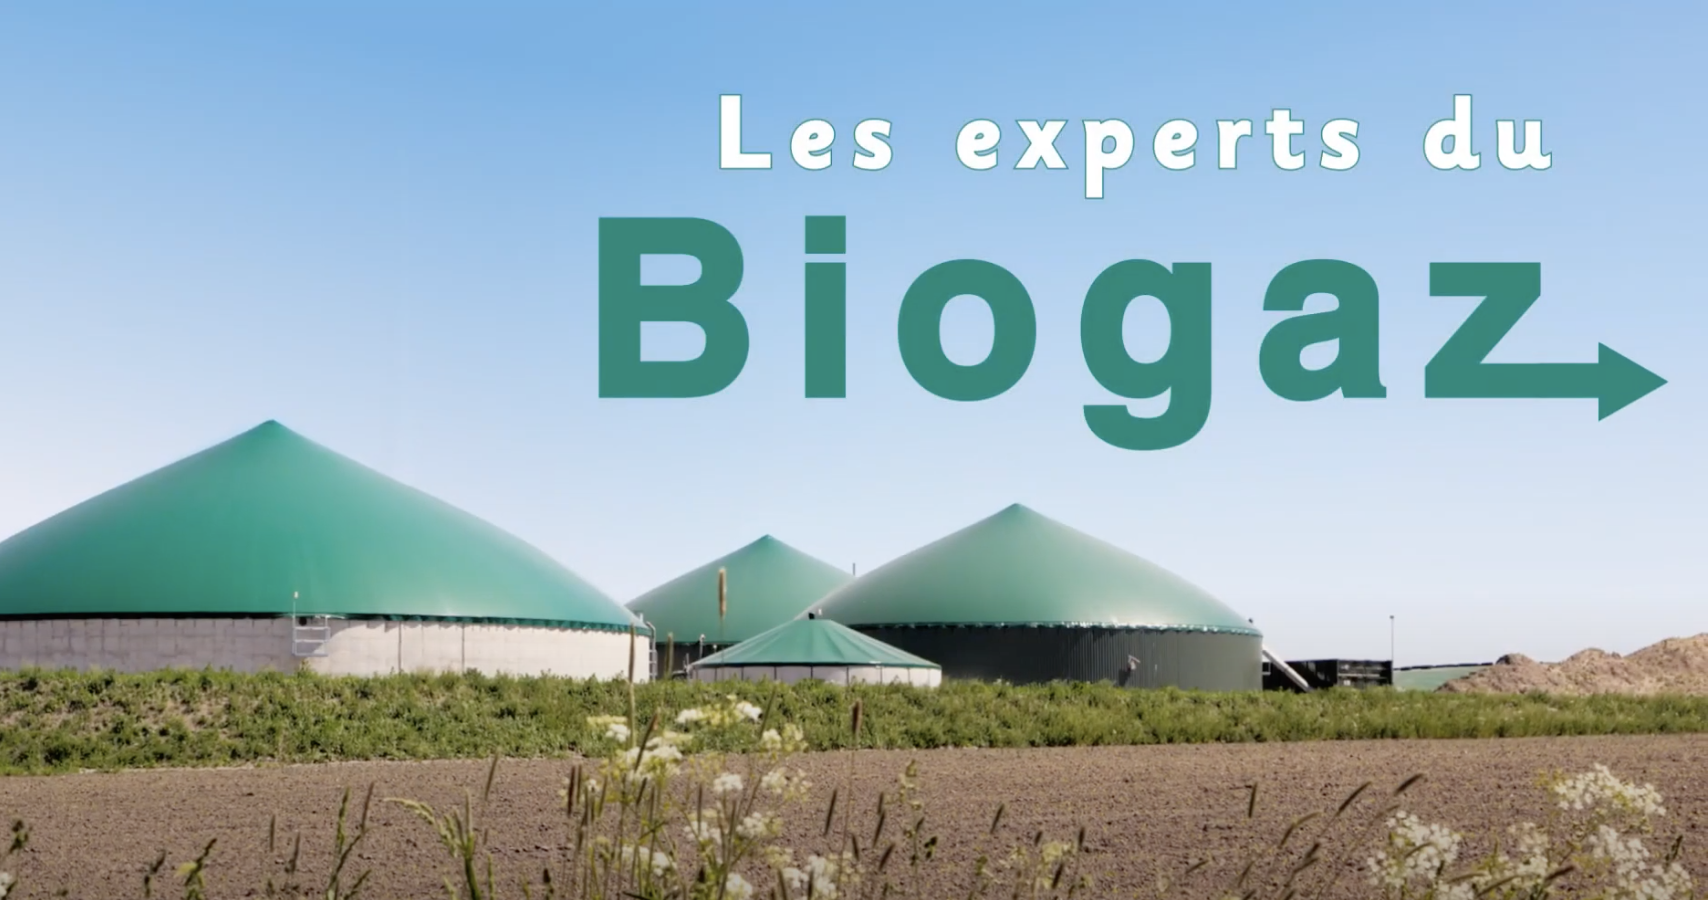 Les experts du biogaz : Seigle hybride & méthanisation